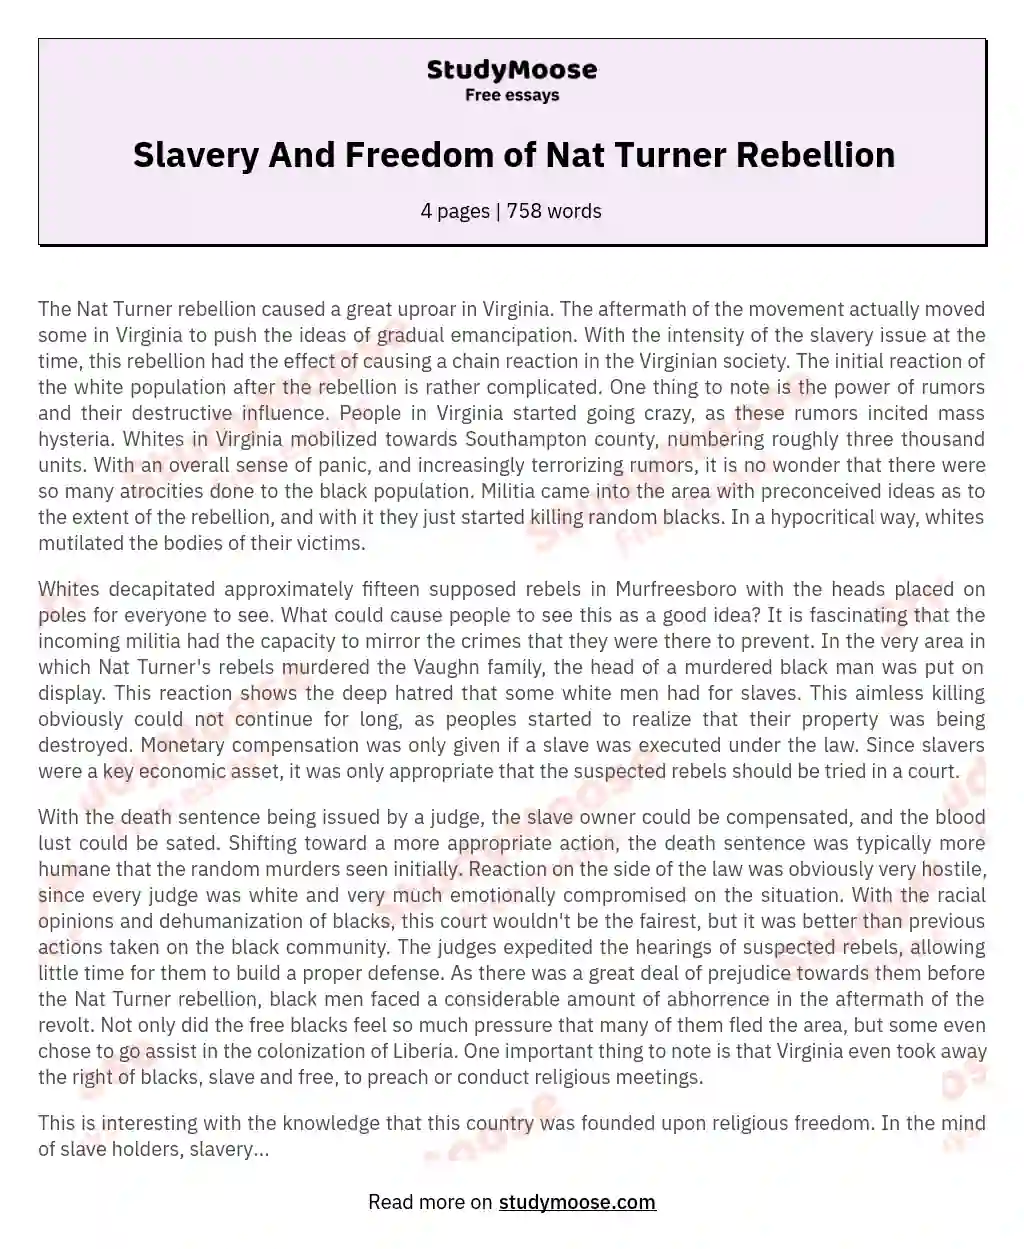 Slavery And Freedom of Nat Turner Rebellion